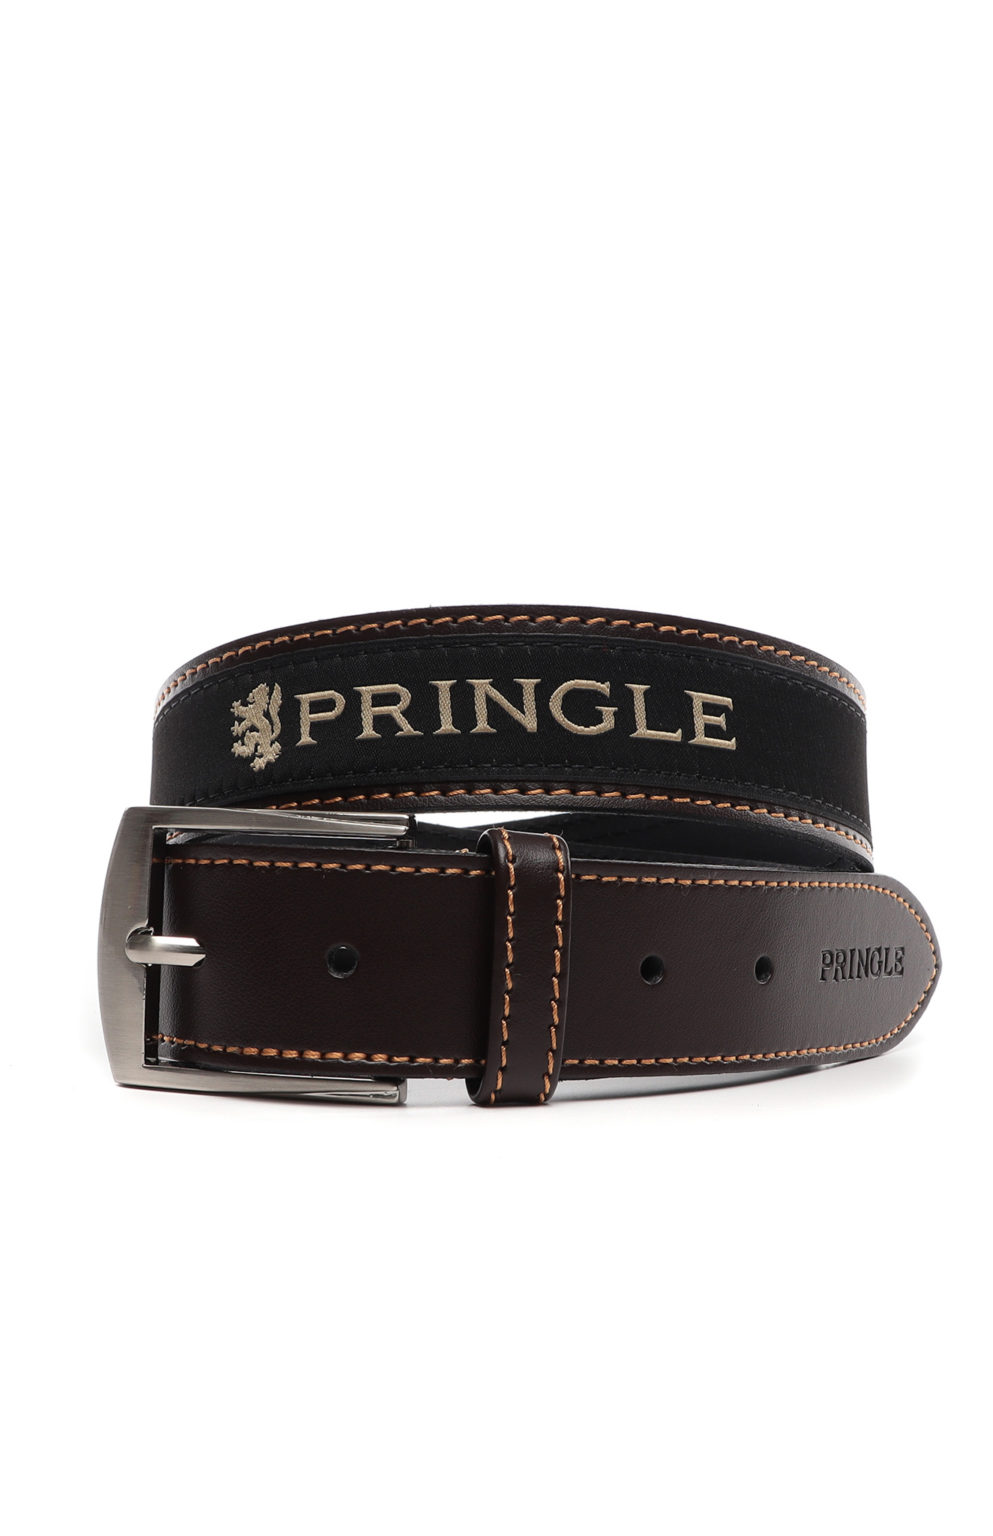 Pringle Casual leather belt men’s - Frontierco